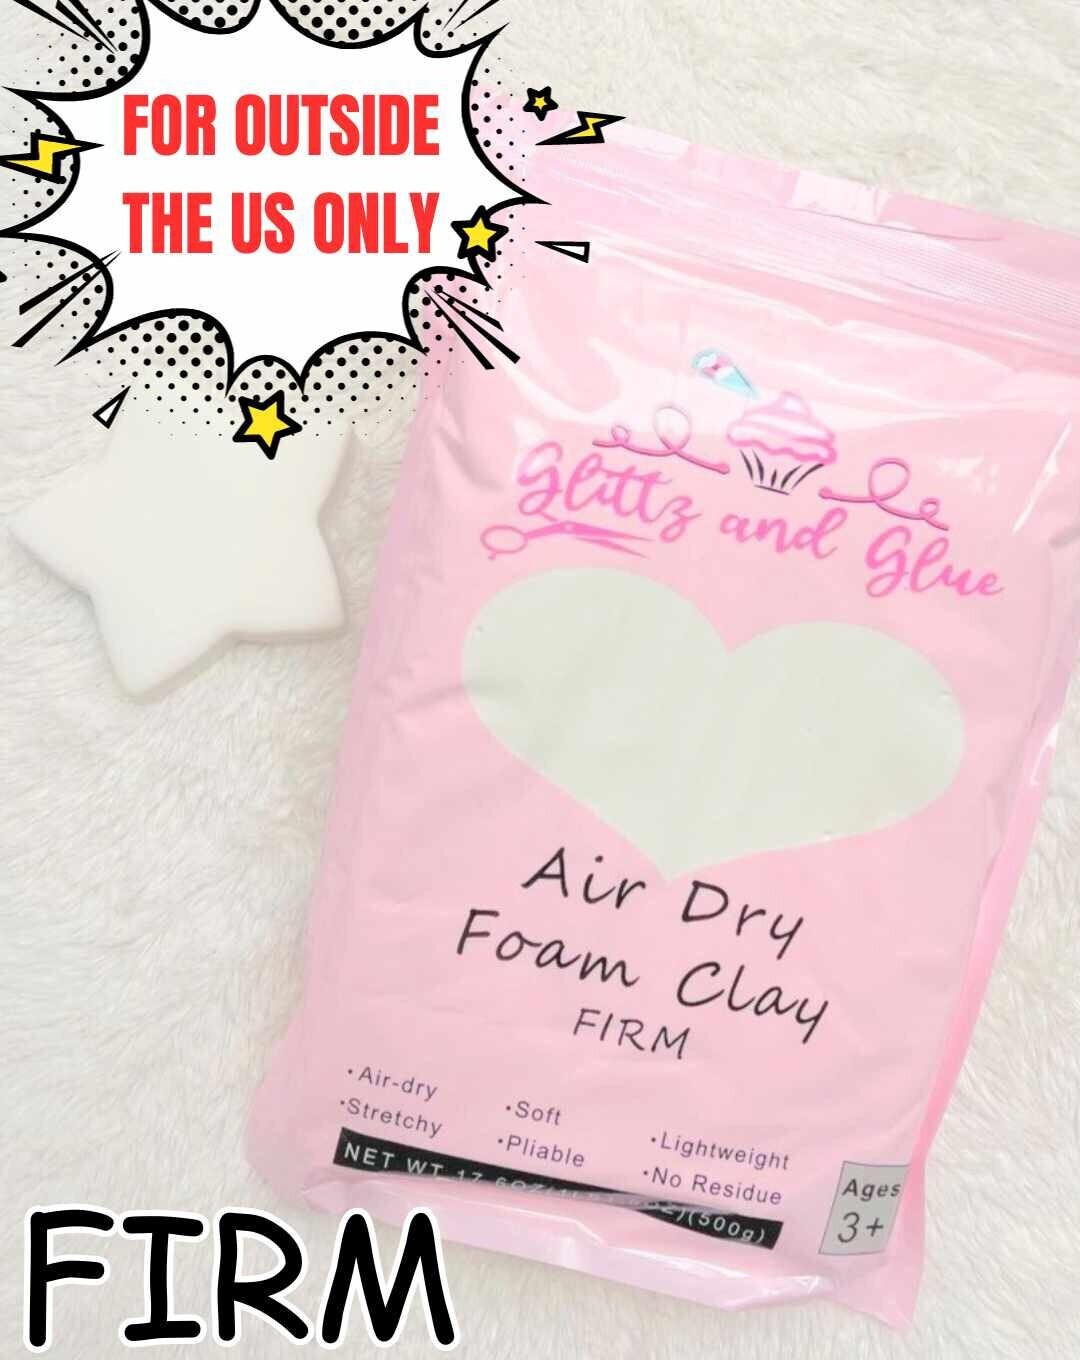 Here it is My honest review of The Glittz and Glue Air Dry Foam Clay.  #glittzandgluefoamclay #glittzandglue #foamclay #craftersoffacebook  #TinasTastefulTreasures #smallbusinessowner